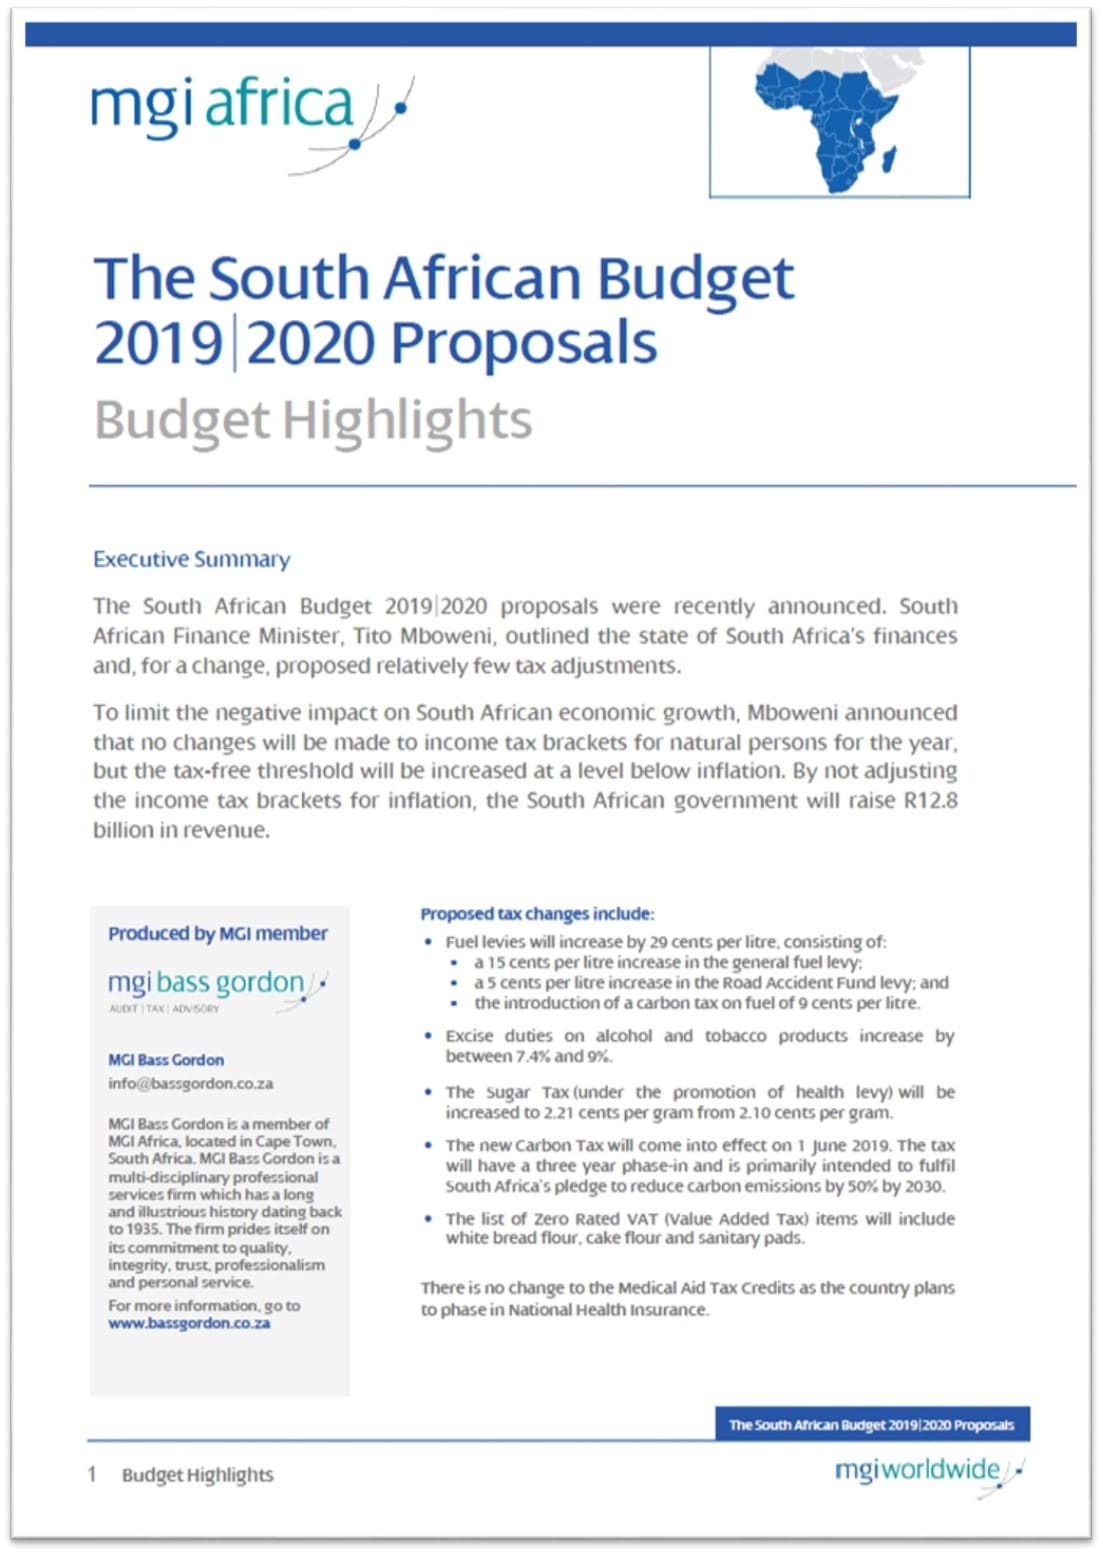 white-paper_the-south-african-budget-2019-20_mgi-bass-gordon.jpg